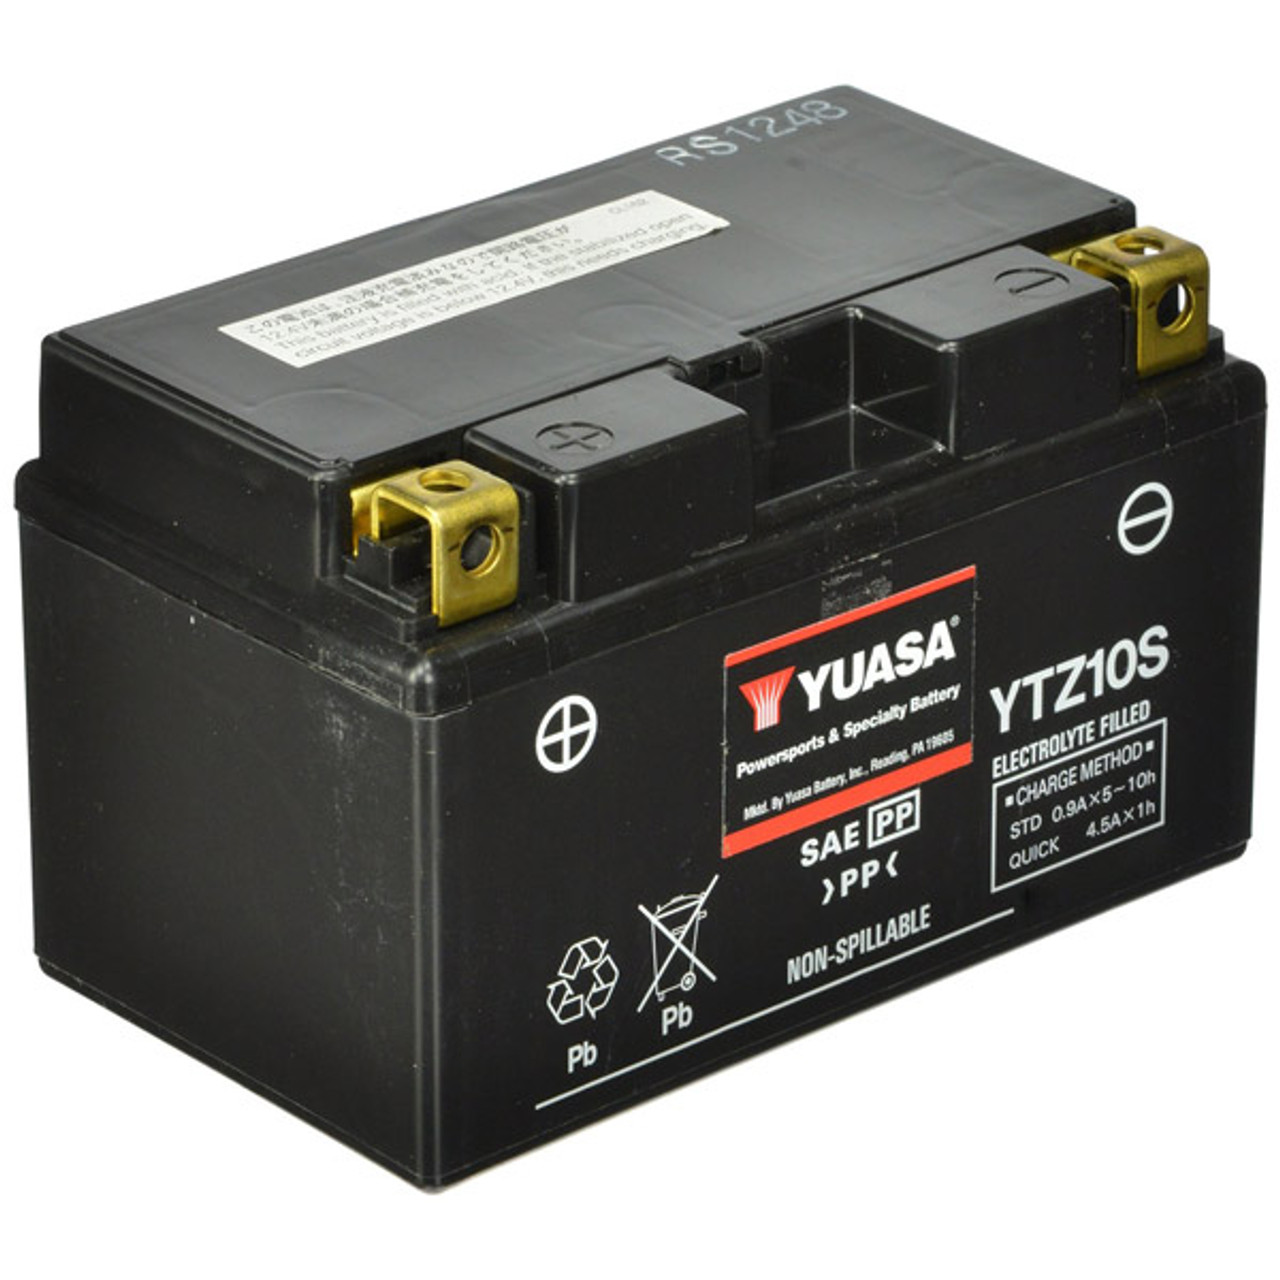 yamaha fz battery charger